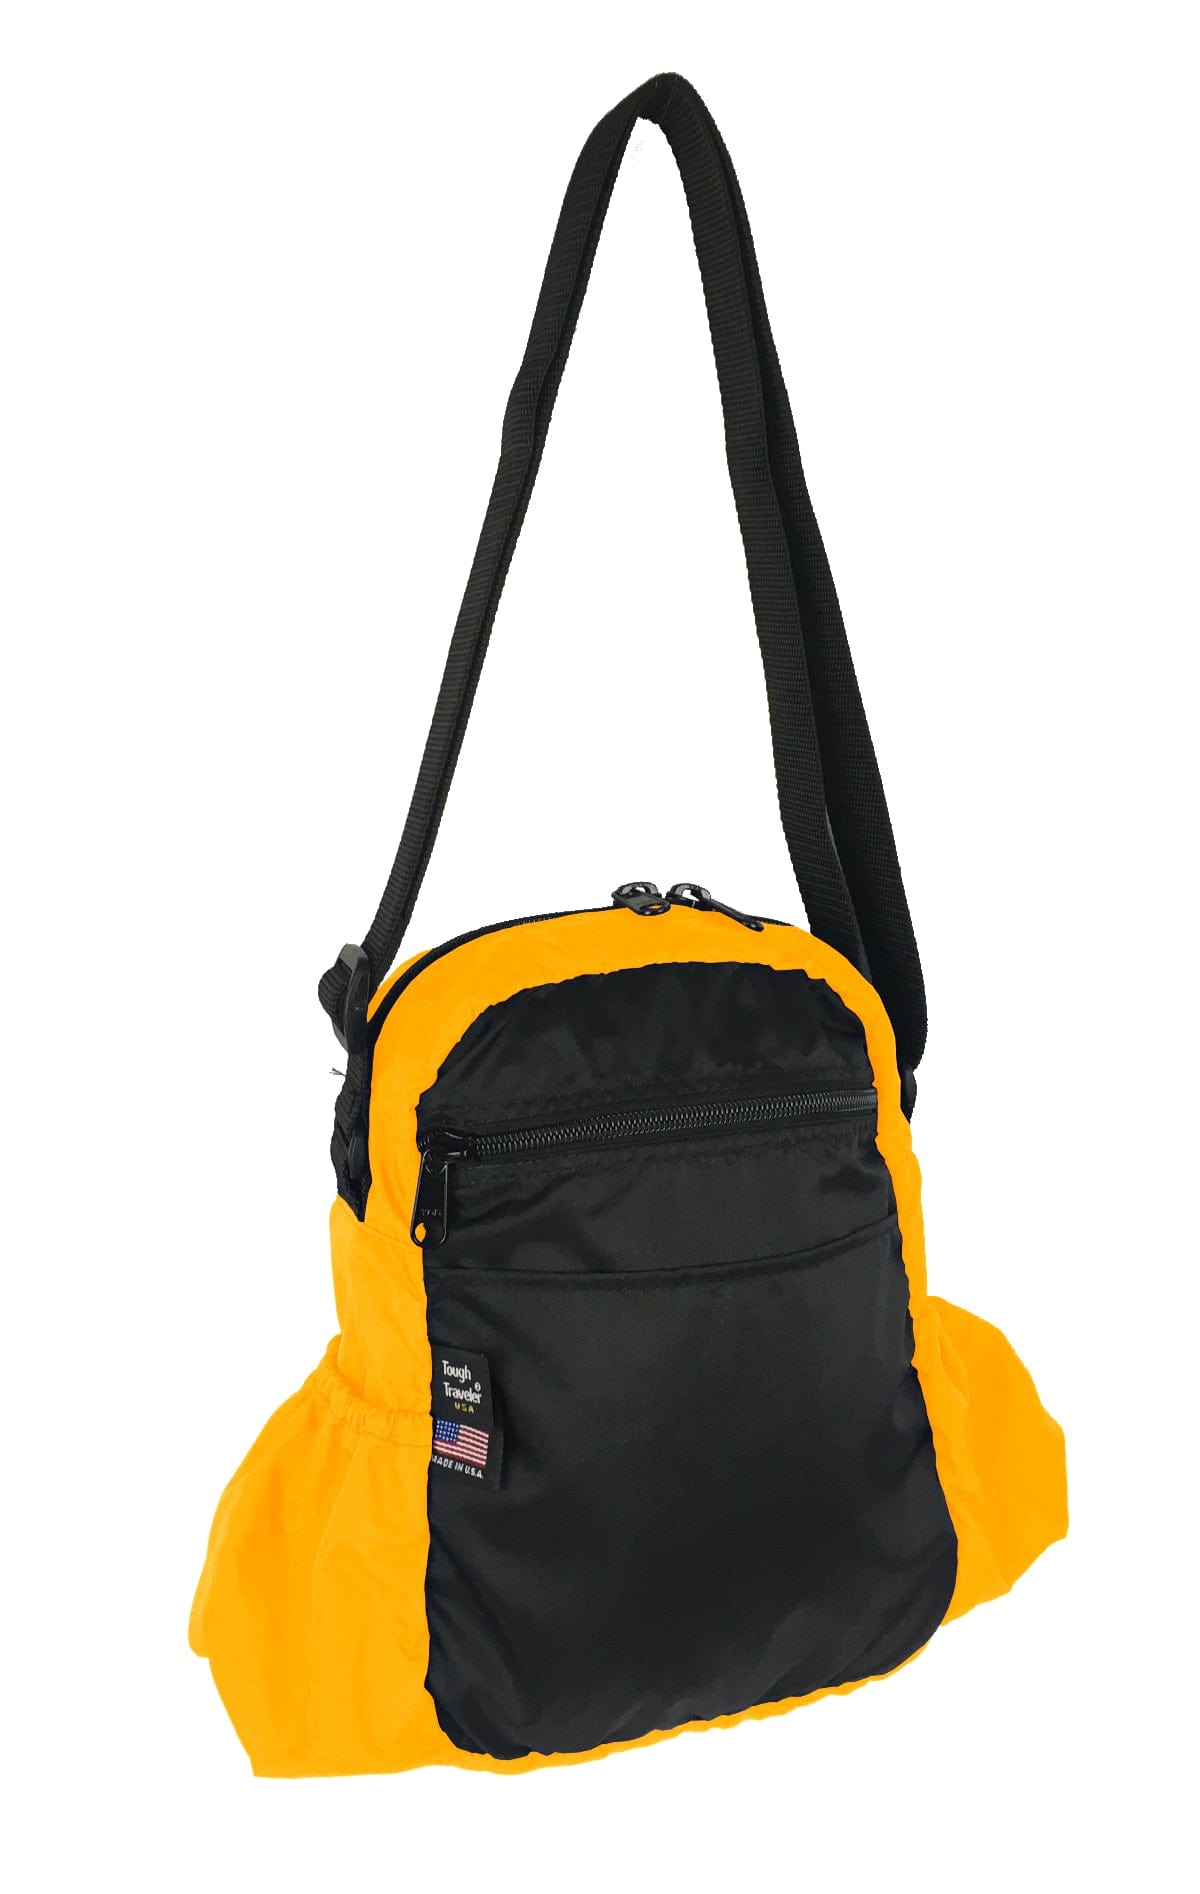 Buy Speedy 20 Bag Organizer Speedy 20 Bag Insert Keep Bag in Online in  India 